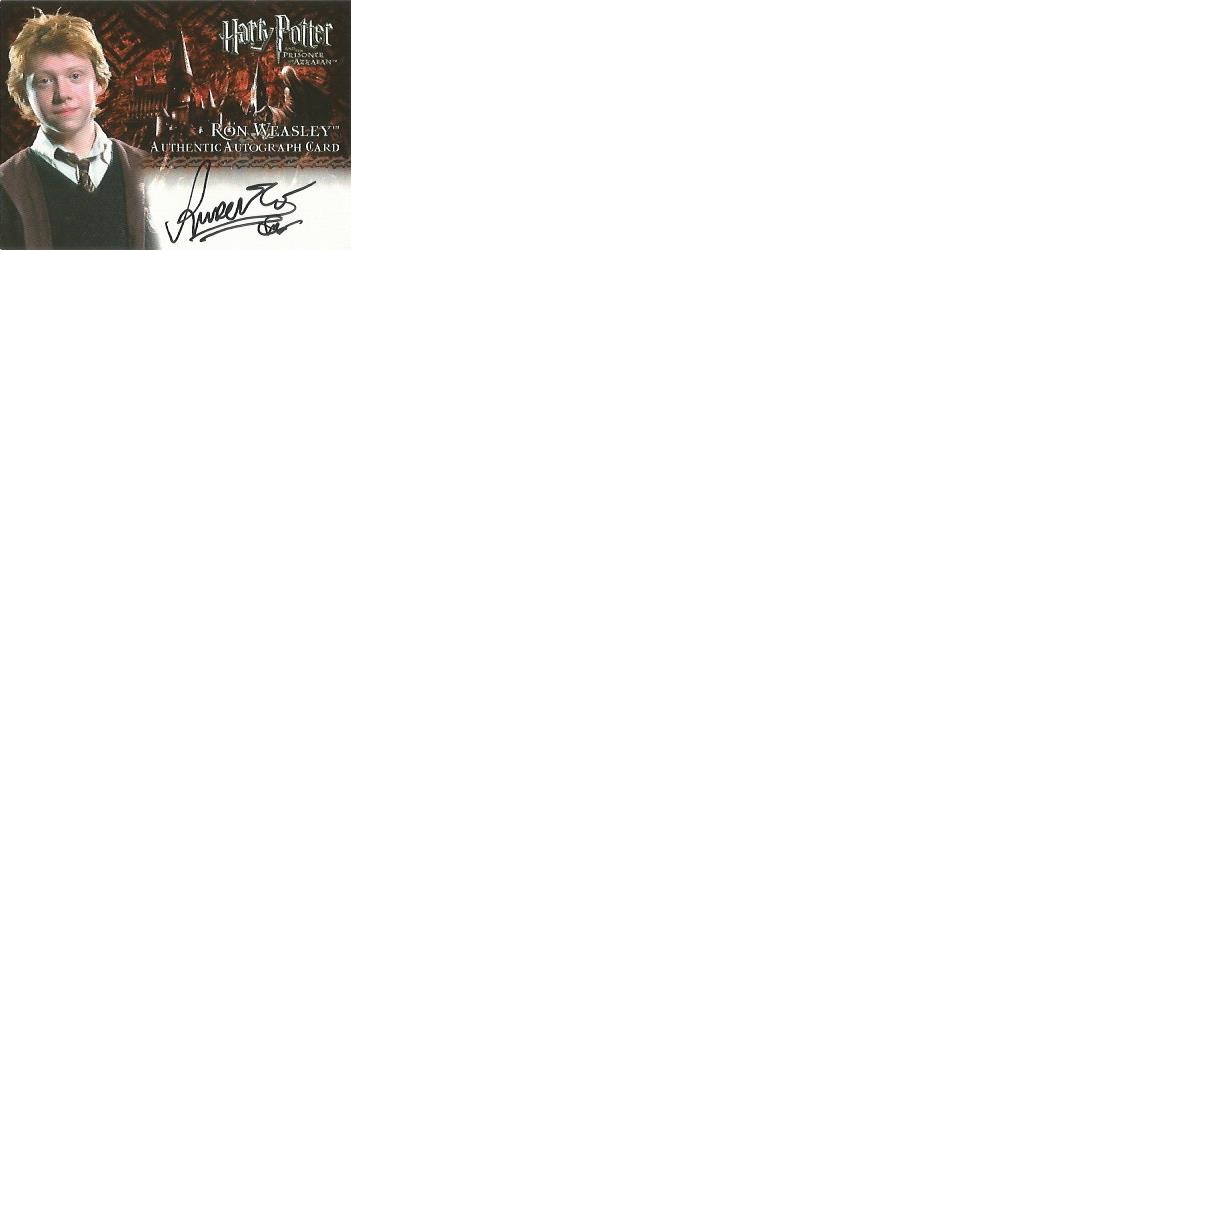 Rupert Grint as Ron Weasley signed Harry Potter Prisoner of Azkaban autographed Artbox trading card.